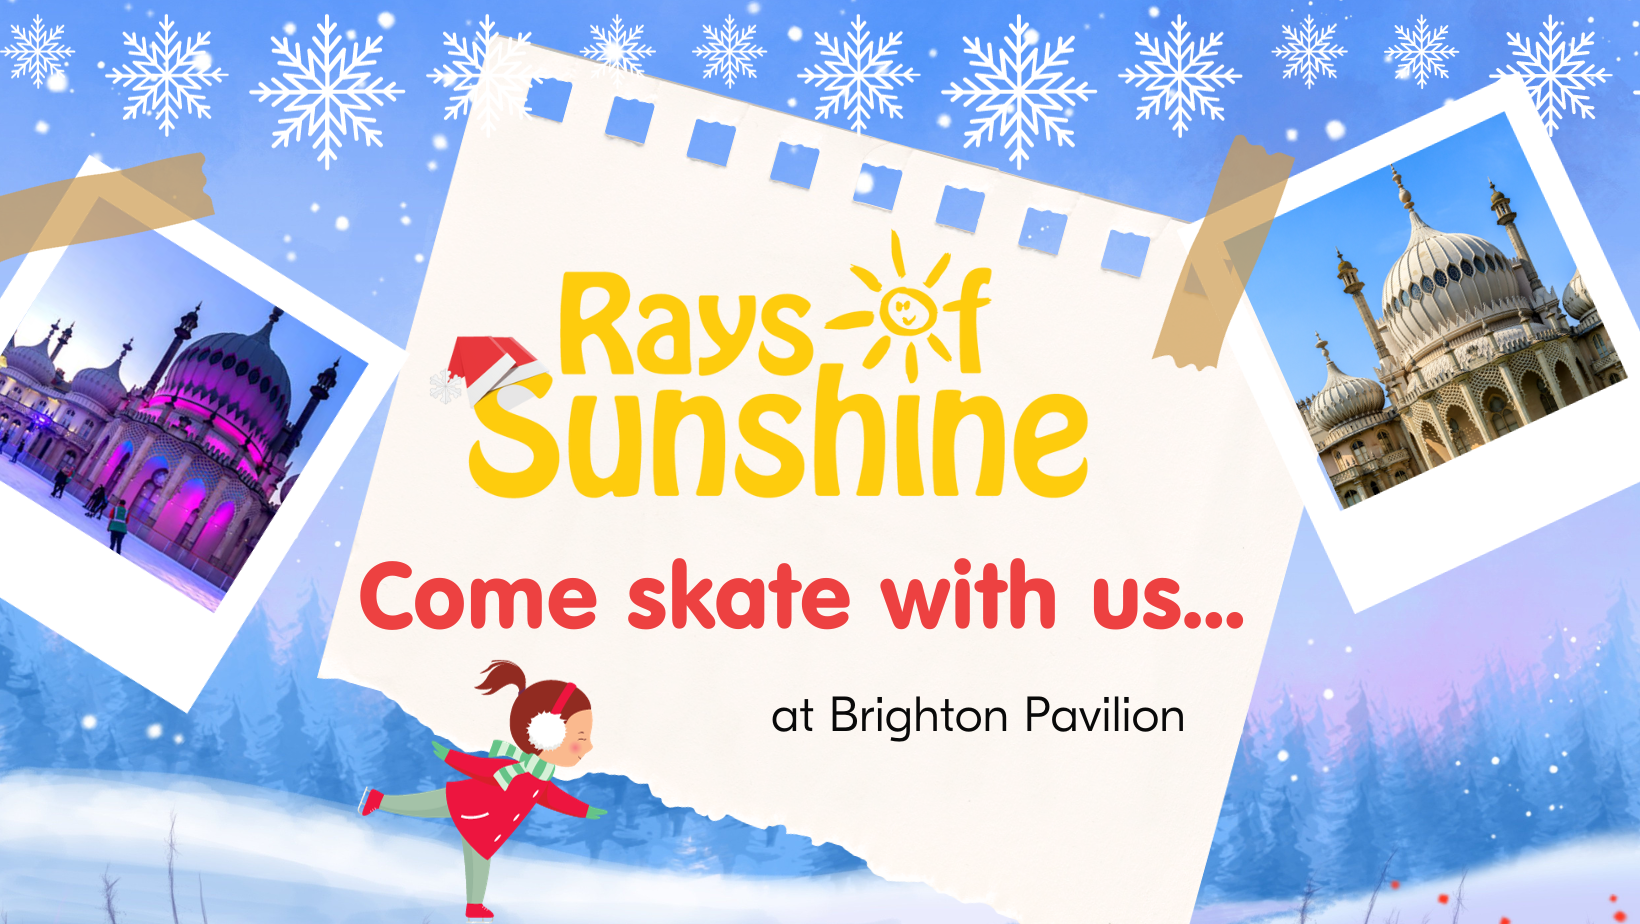 Brighton Ice skating pavillion